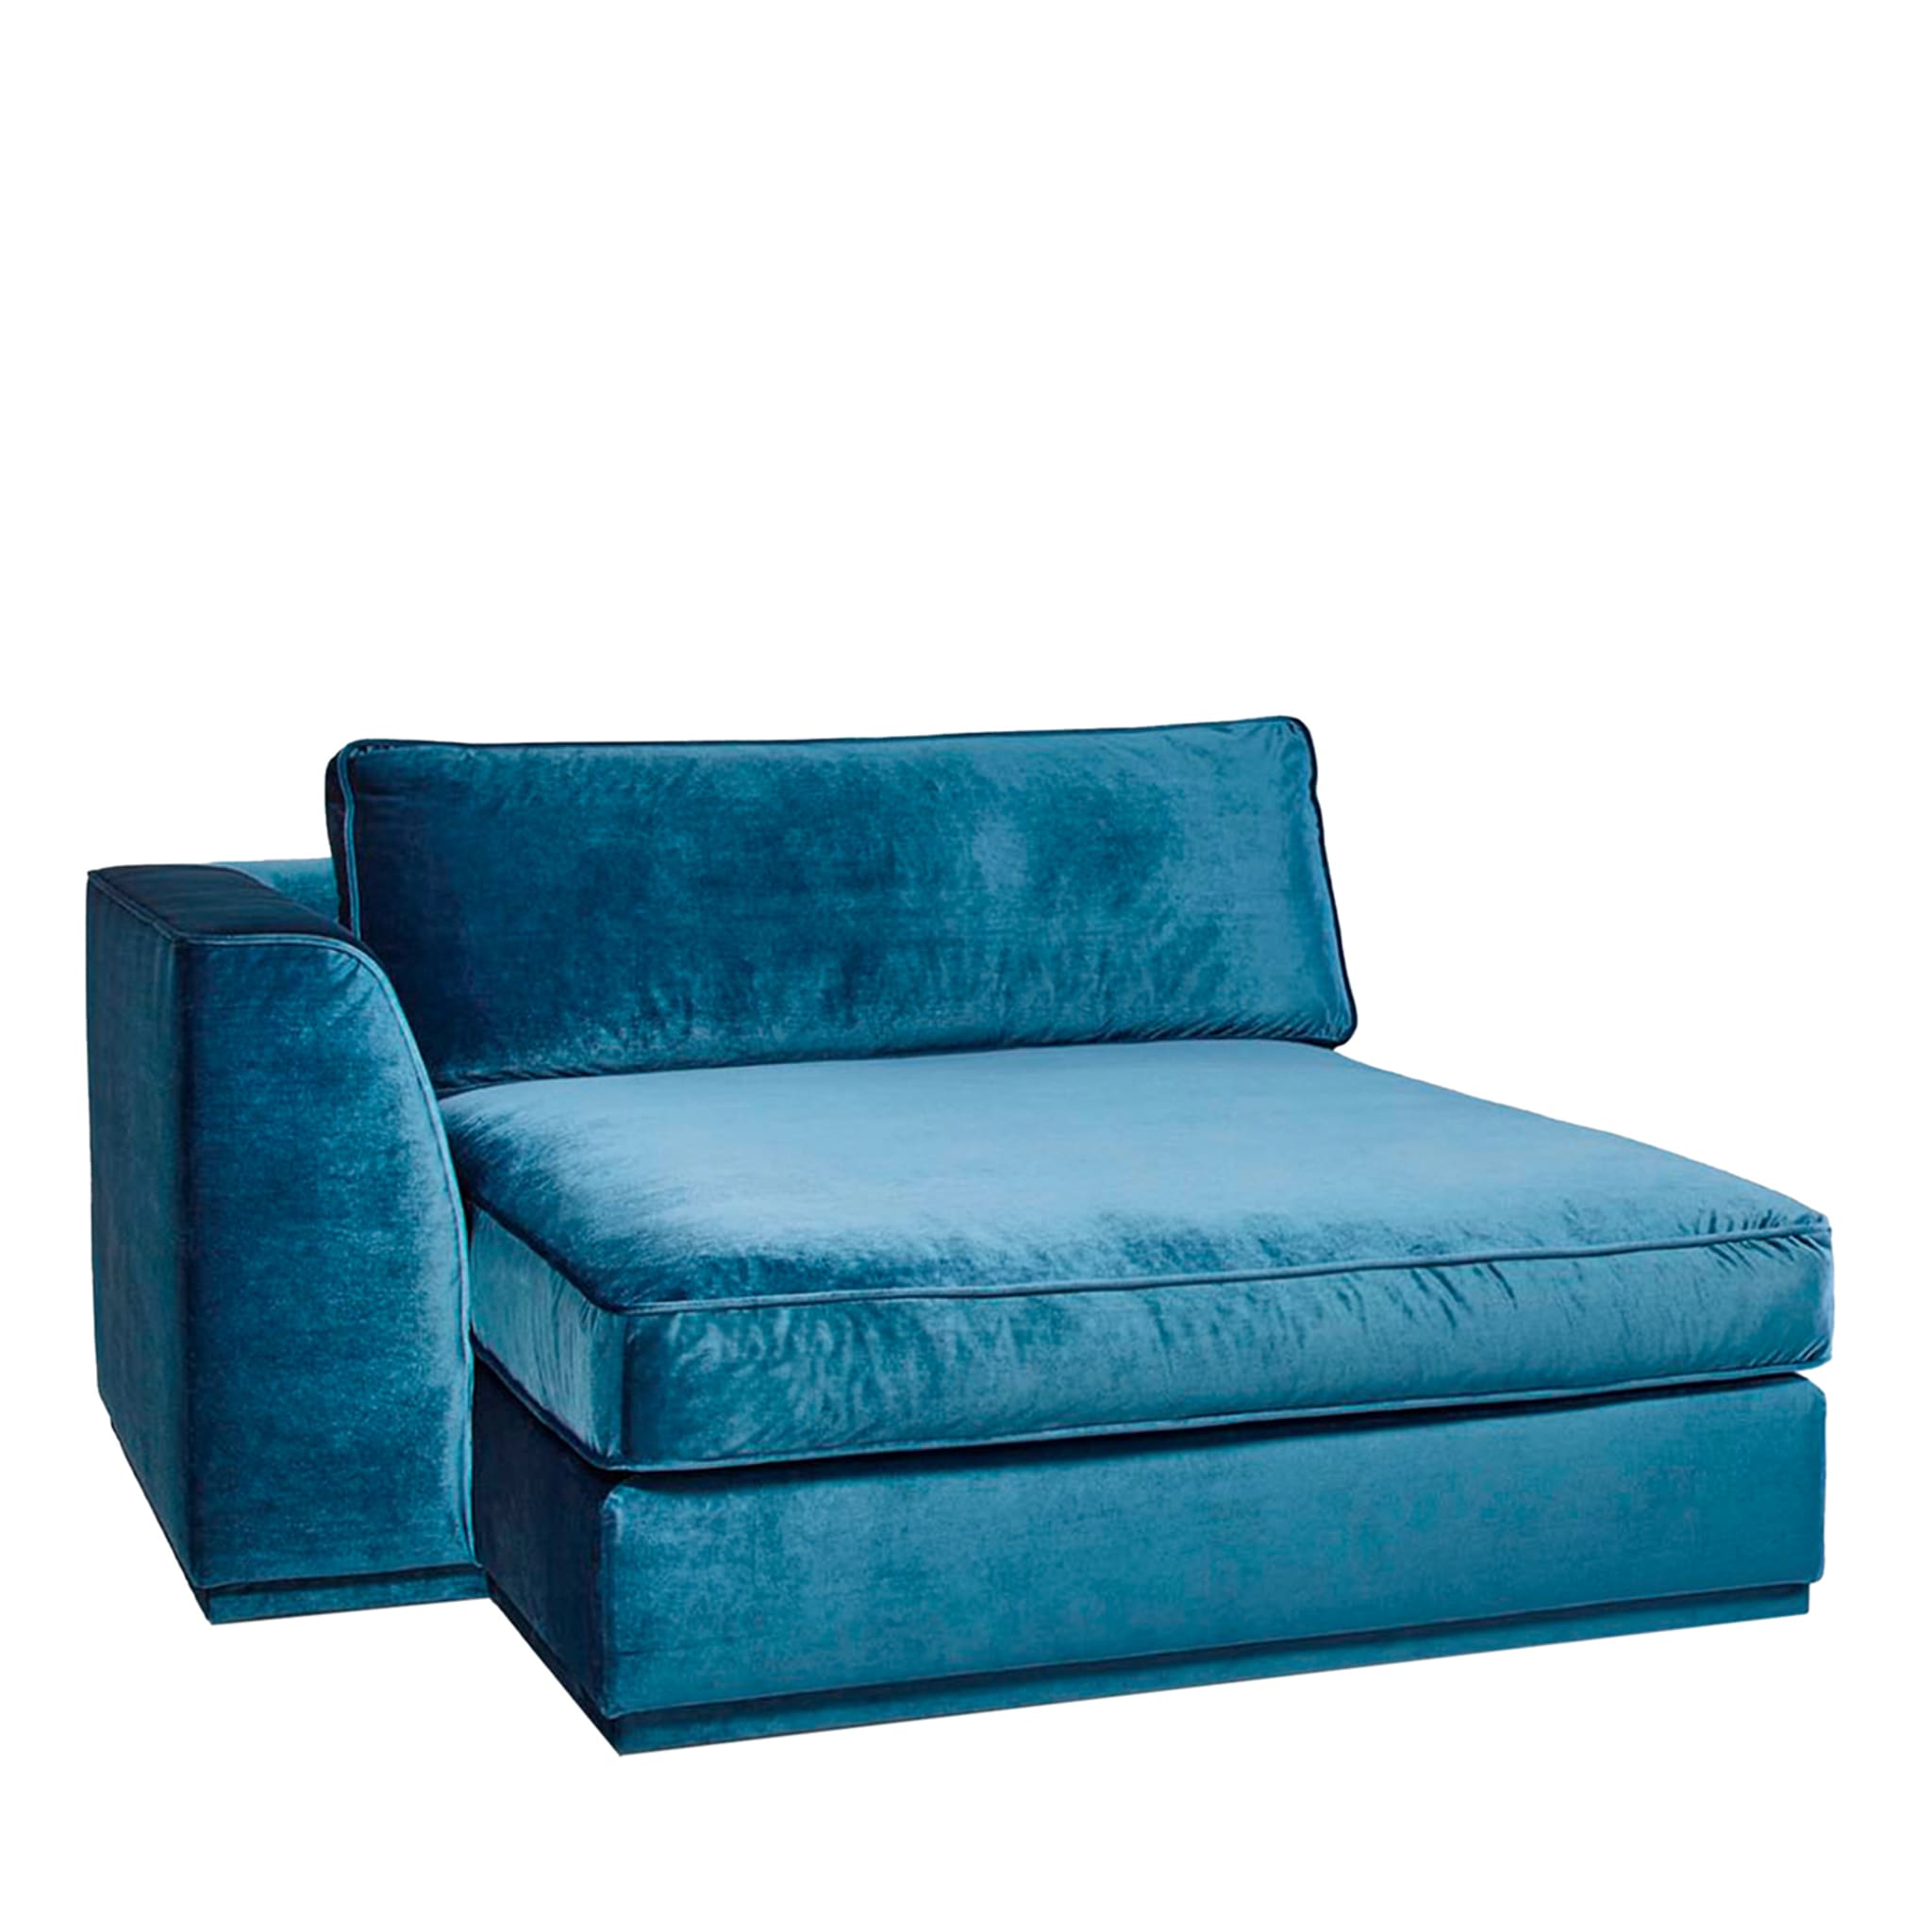 Chaise longue azul Dorian - Vista principal